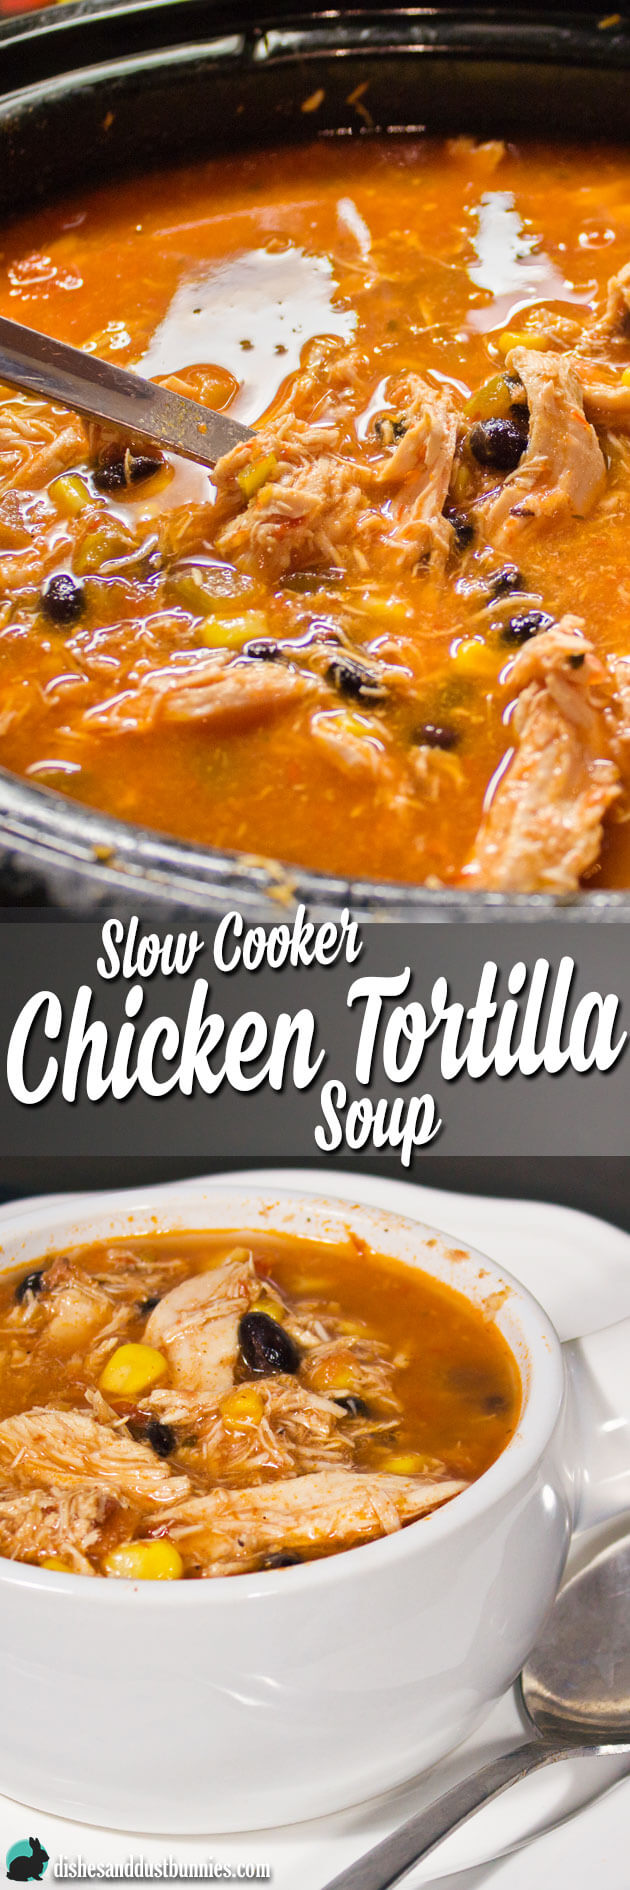 Slow Cooker Chicken Tortilla Soup from dishesanddustbunnies.com